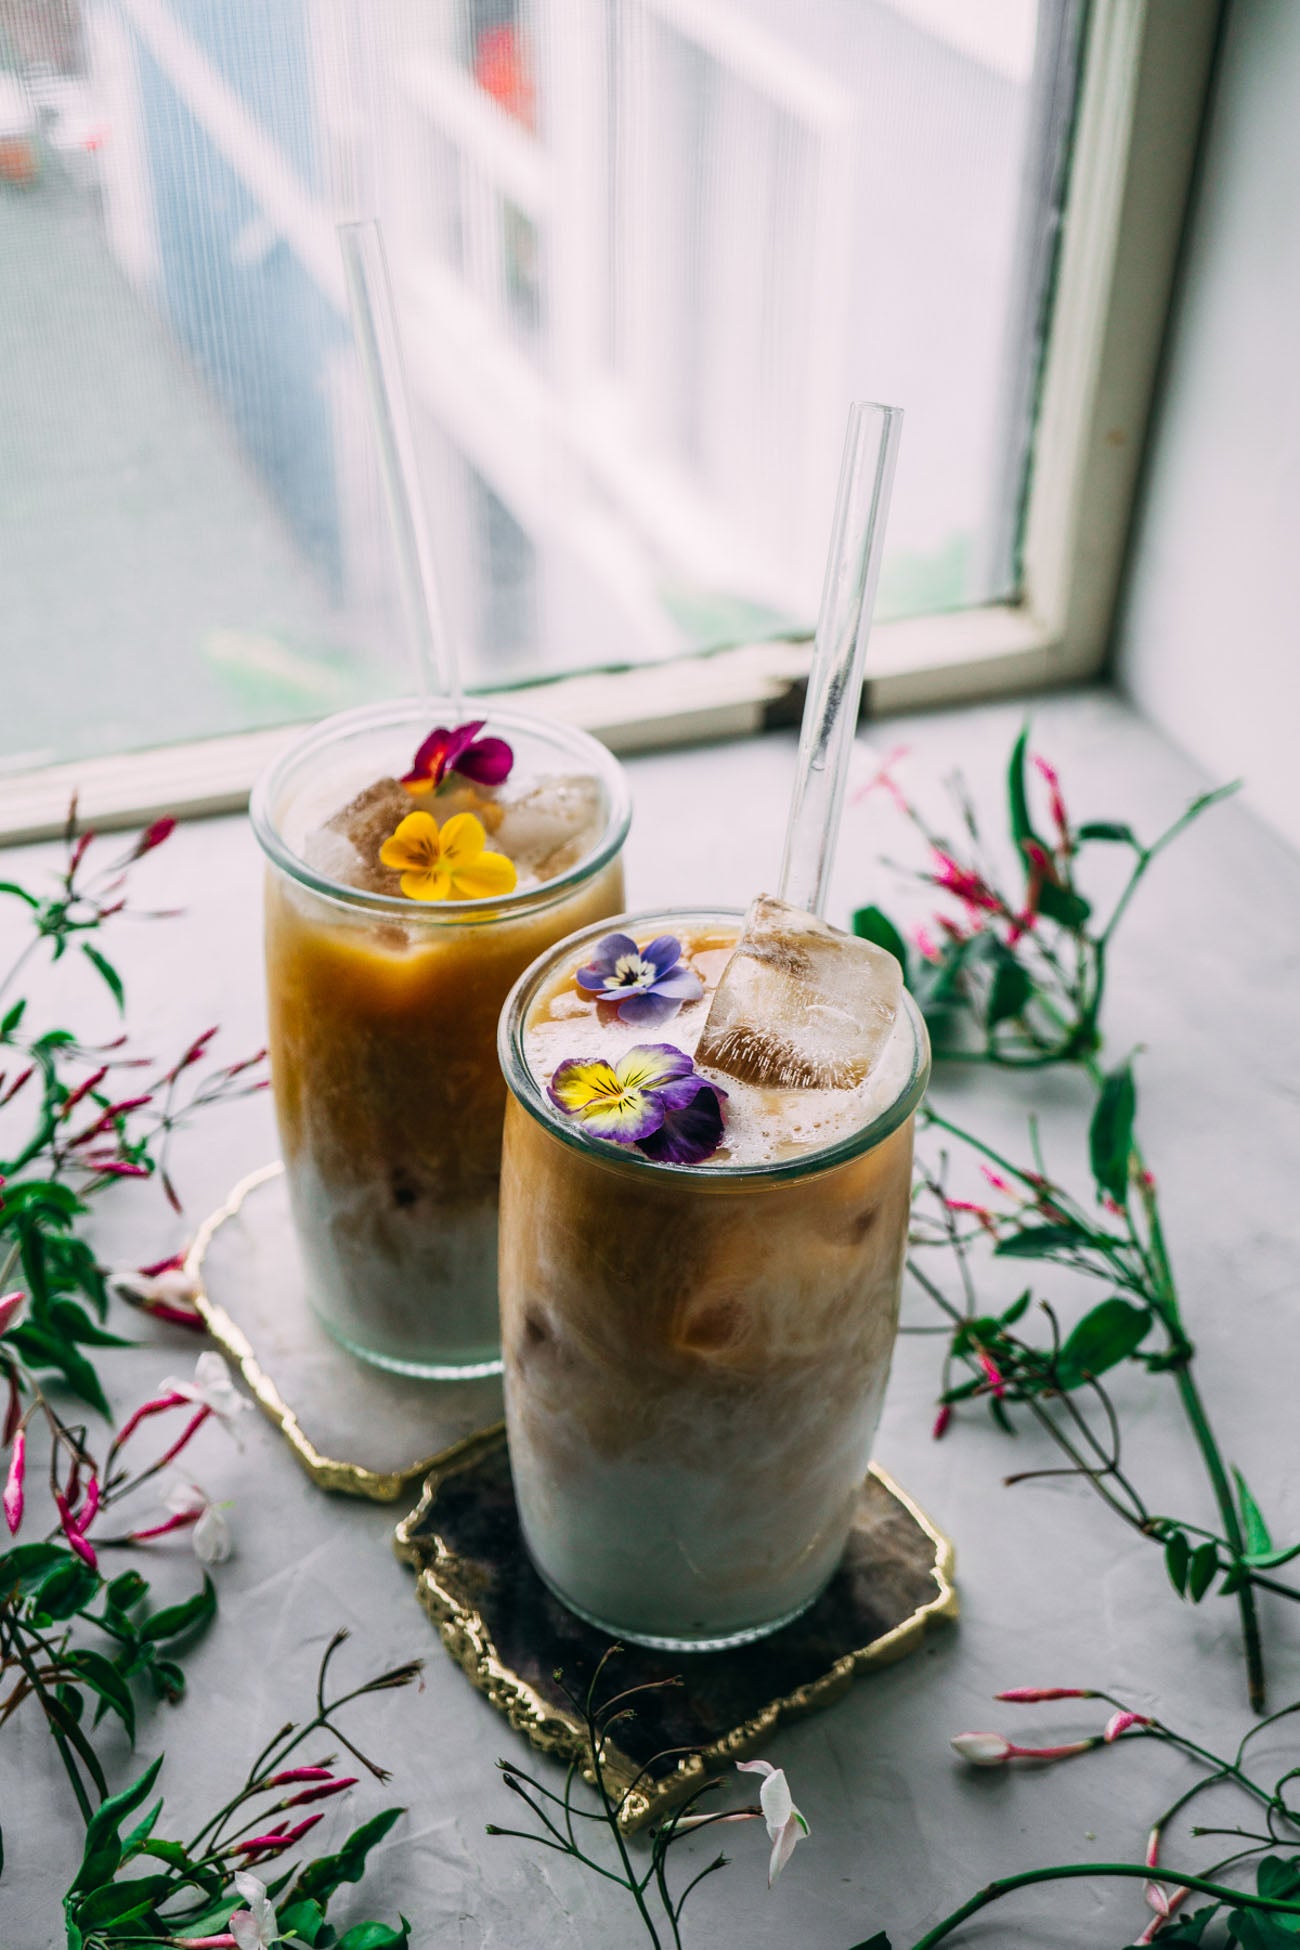 How to make creamy vegan Vietnamese latte